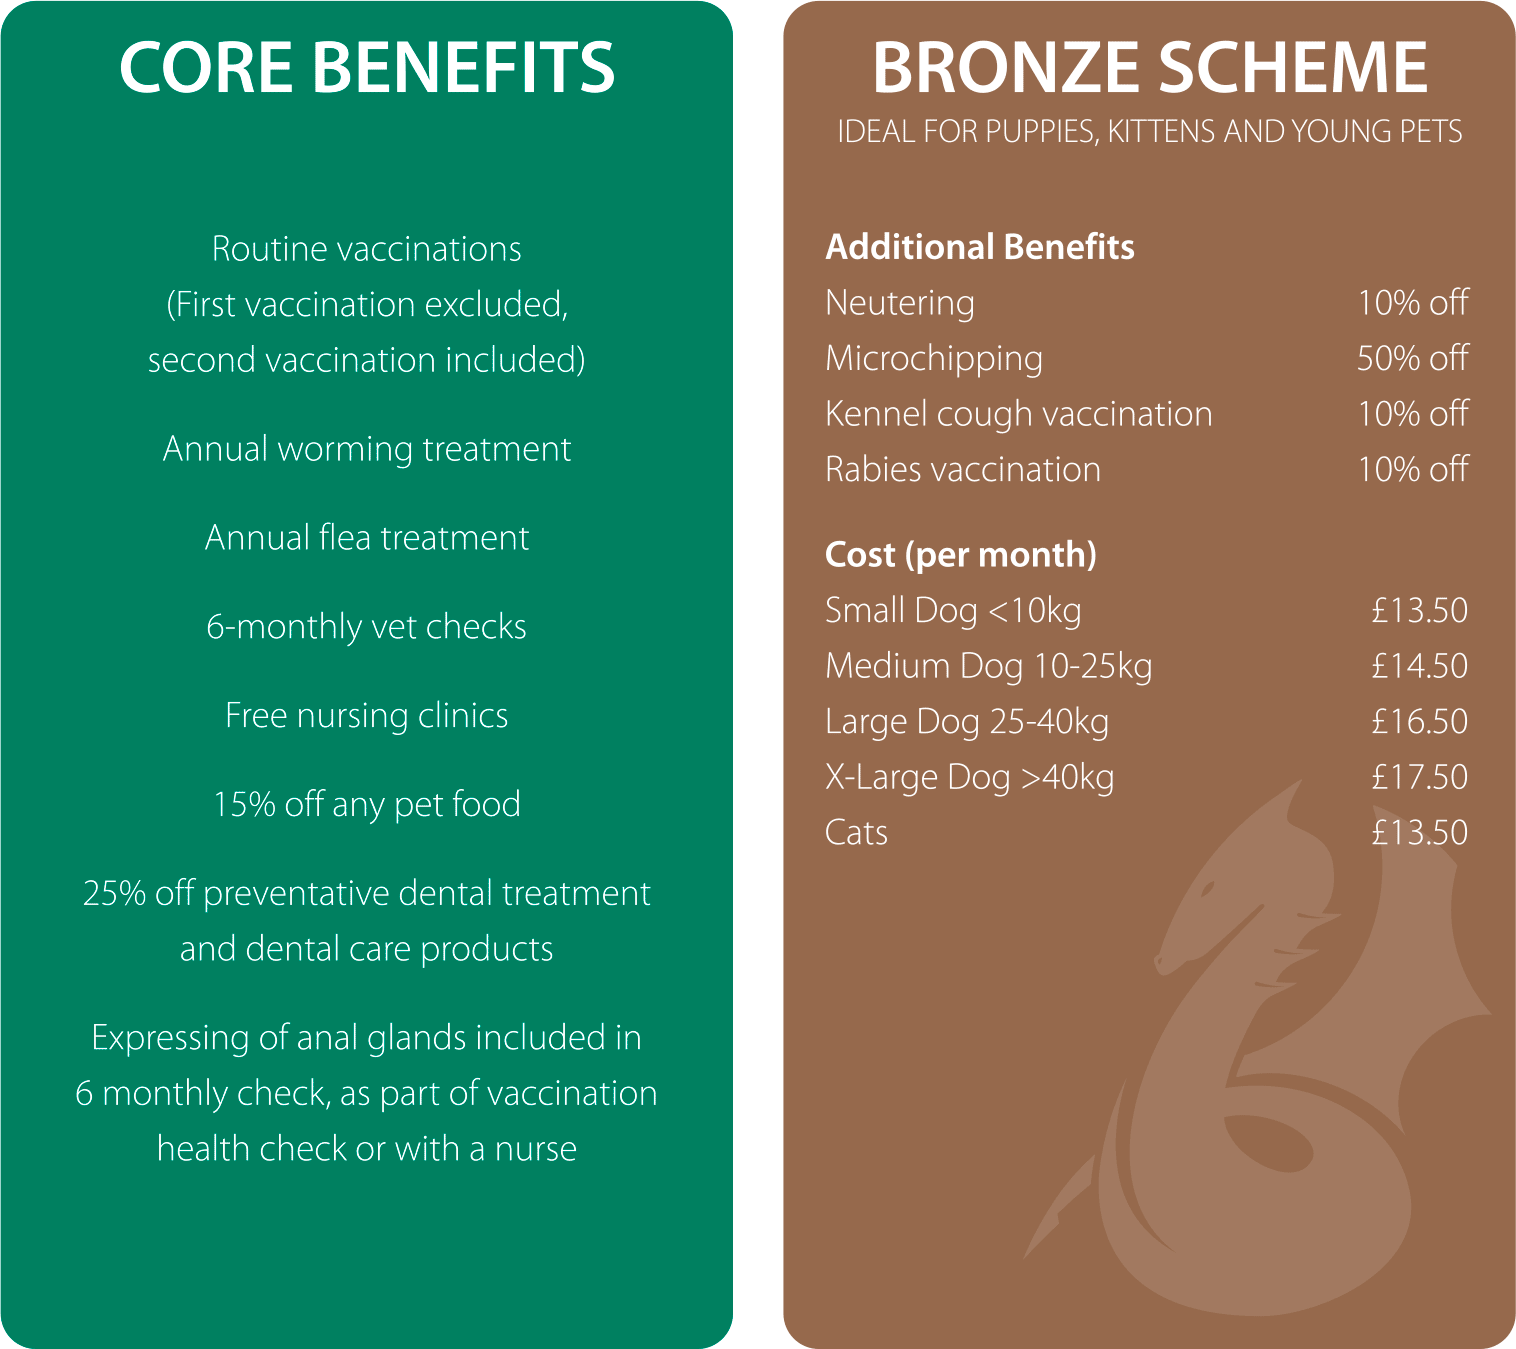 Core benefits